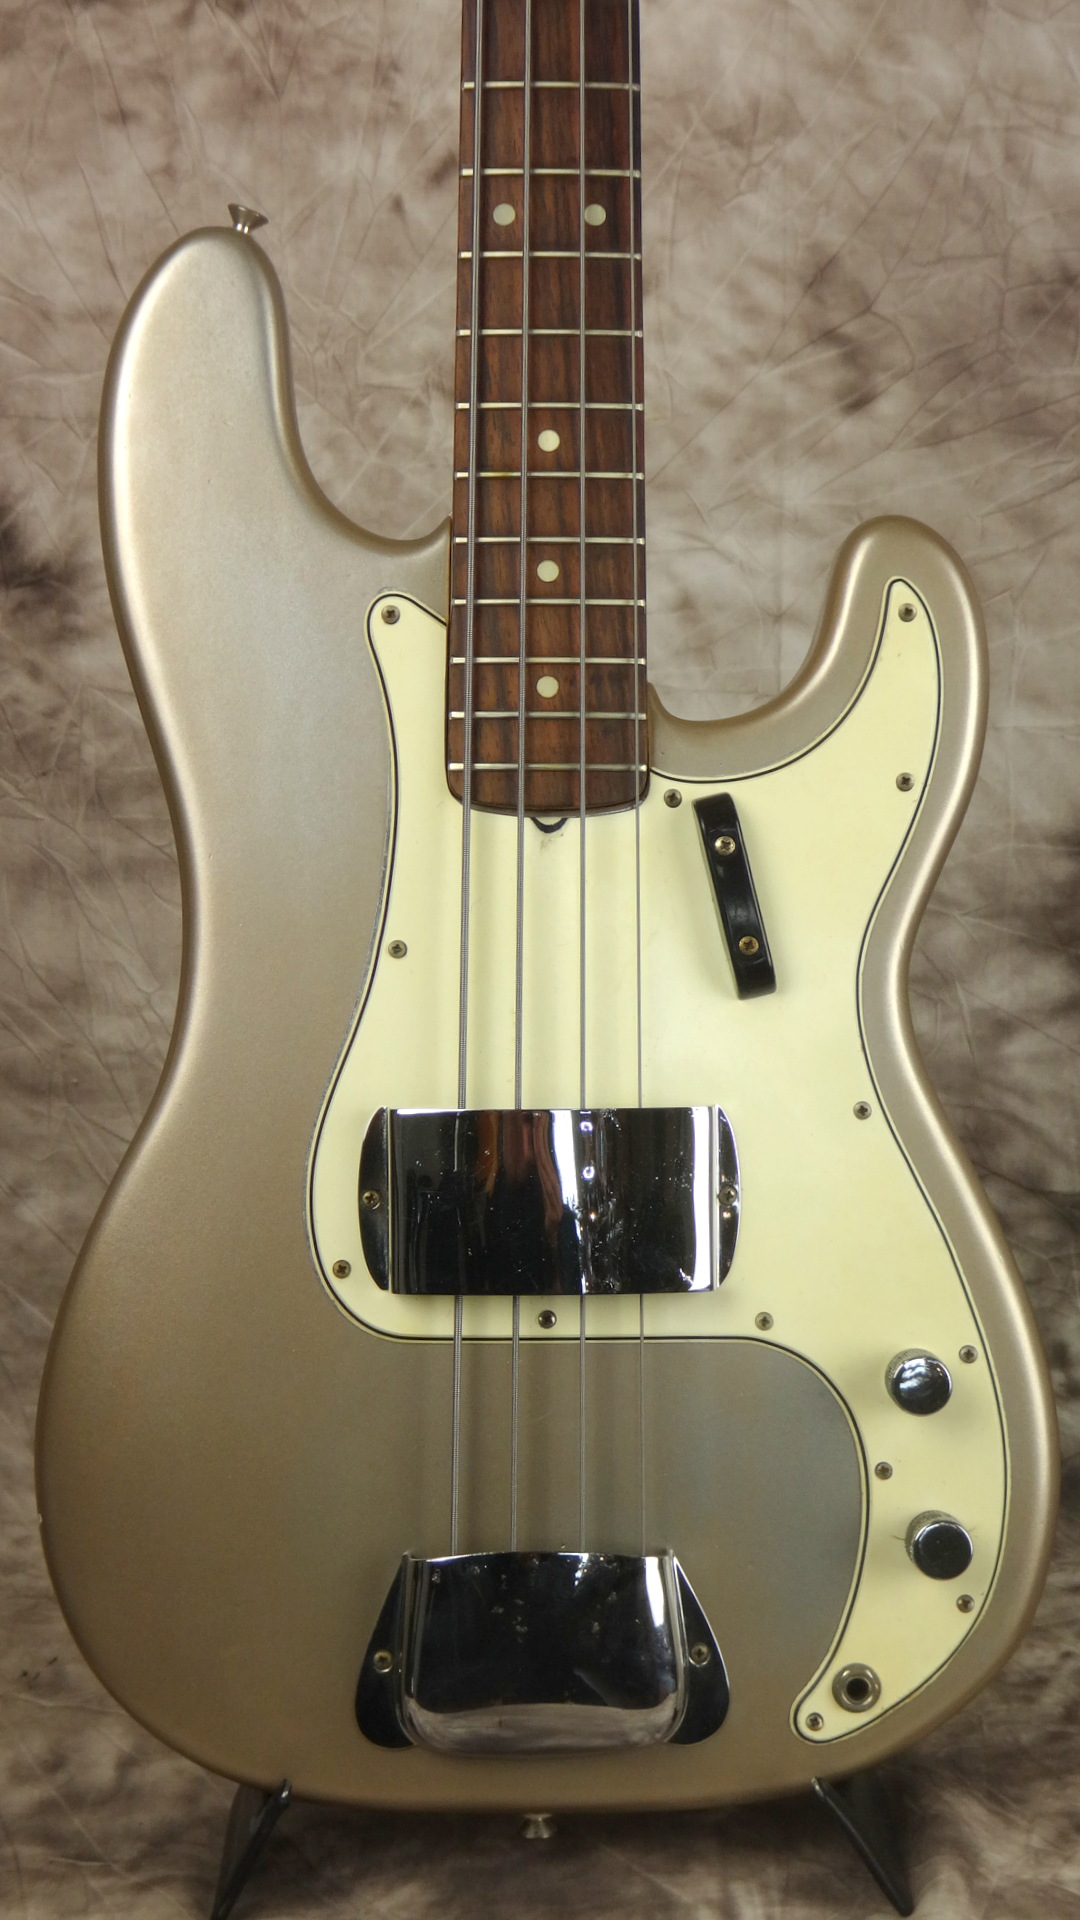 Fedner_precision-Bass-1968-refinished-shoreline-gold-002.JPG